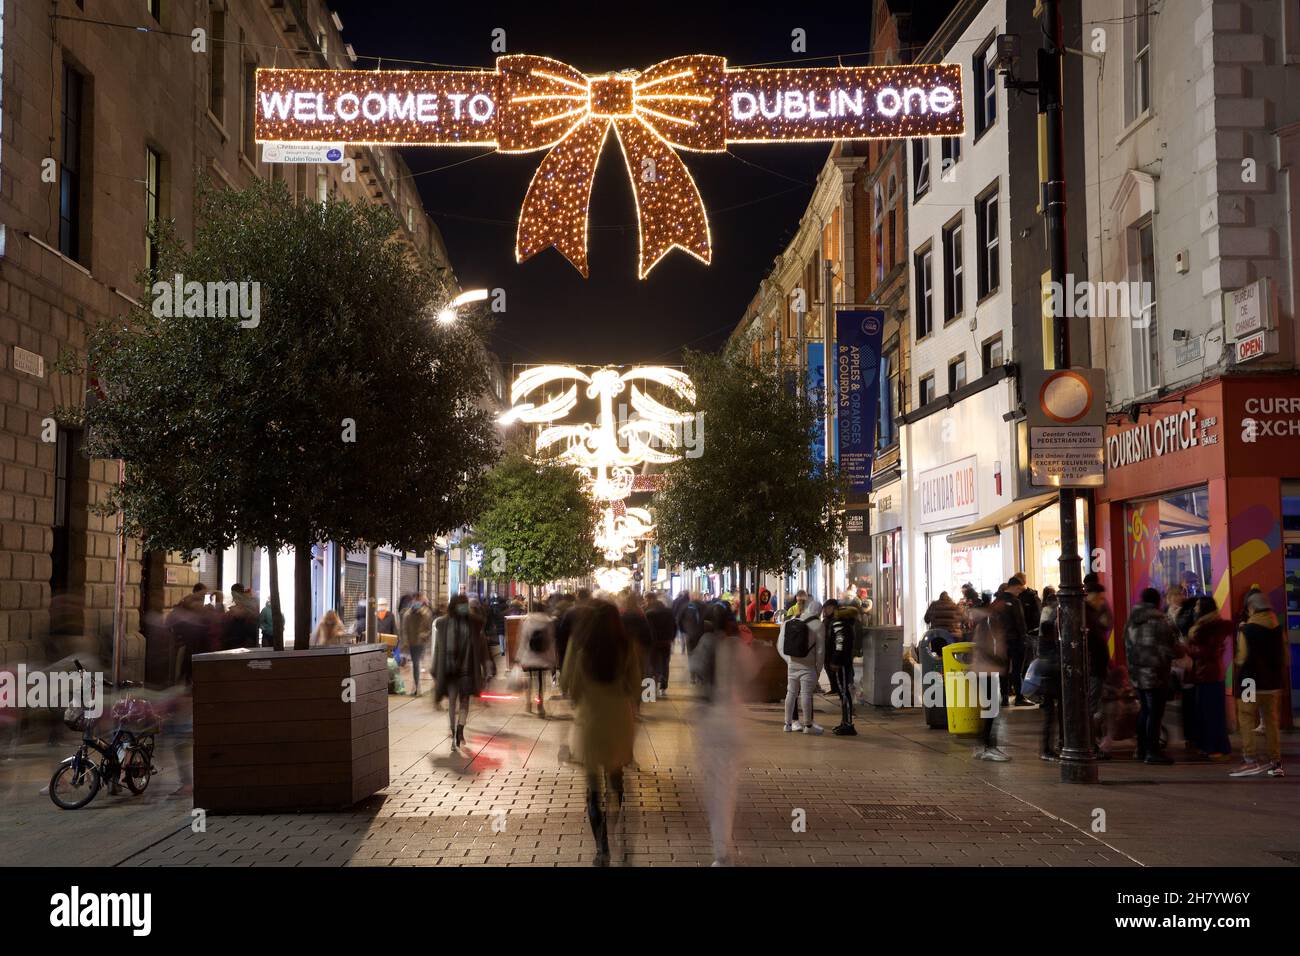 Dublin, Ireland - November 24, 2021: shoppers walk beneath the recently illuminated Christmas lights on Grafton Street, Dublin's main shopping thoroug Stock Photo